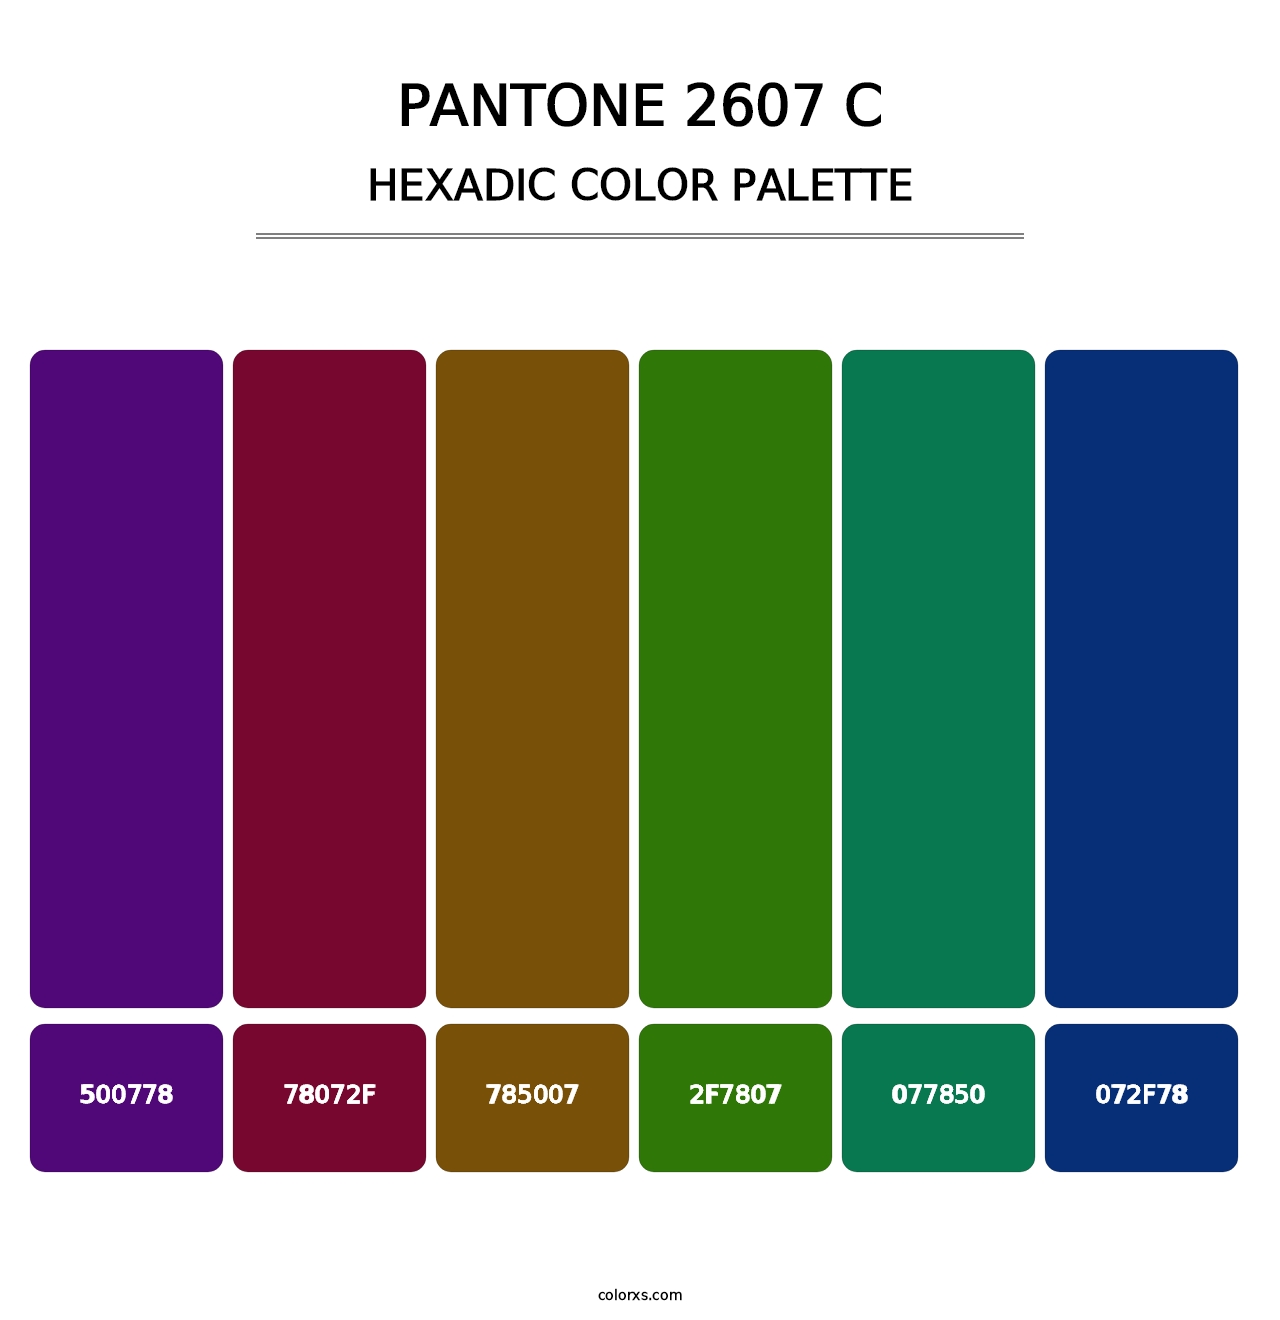 PANTONE 2607 C - Hexadic Color Palette